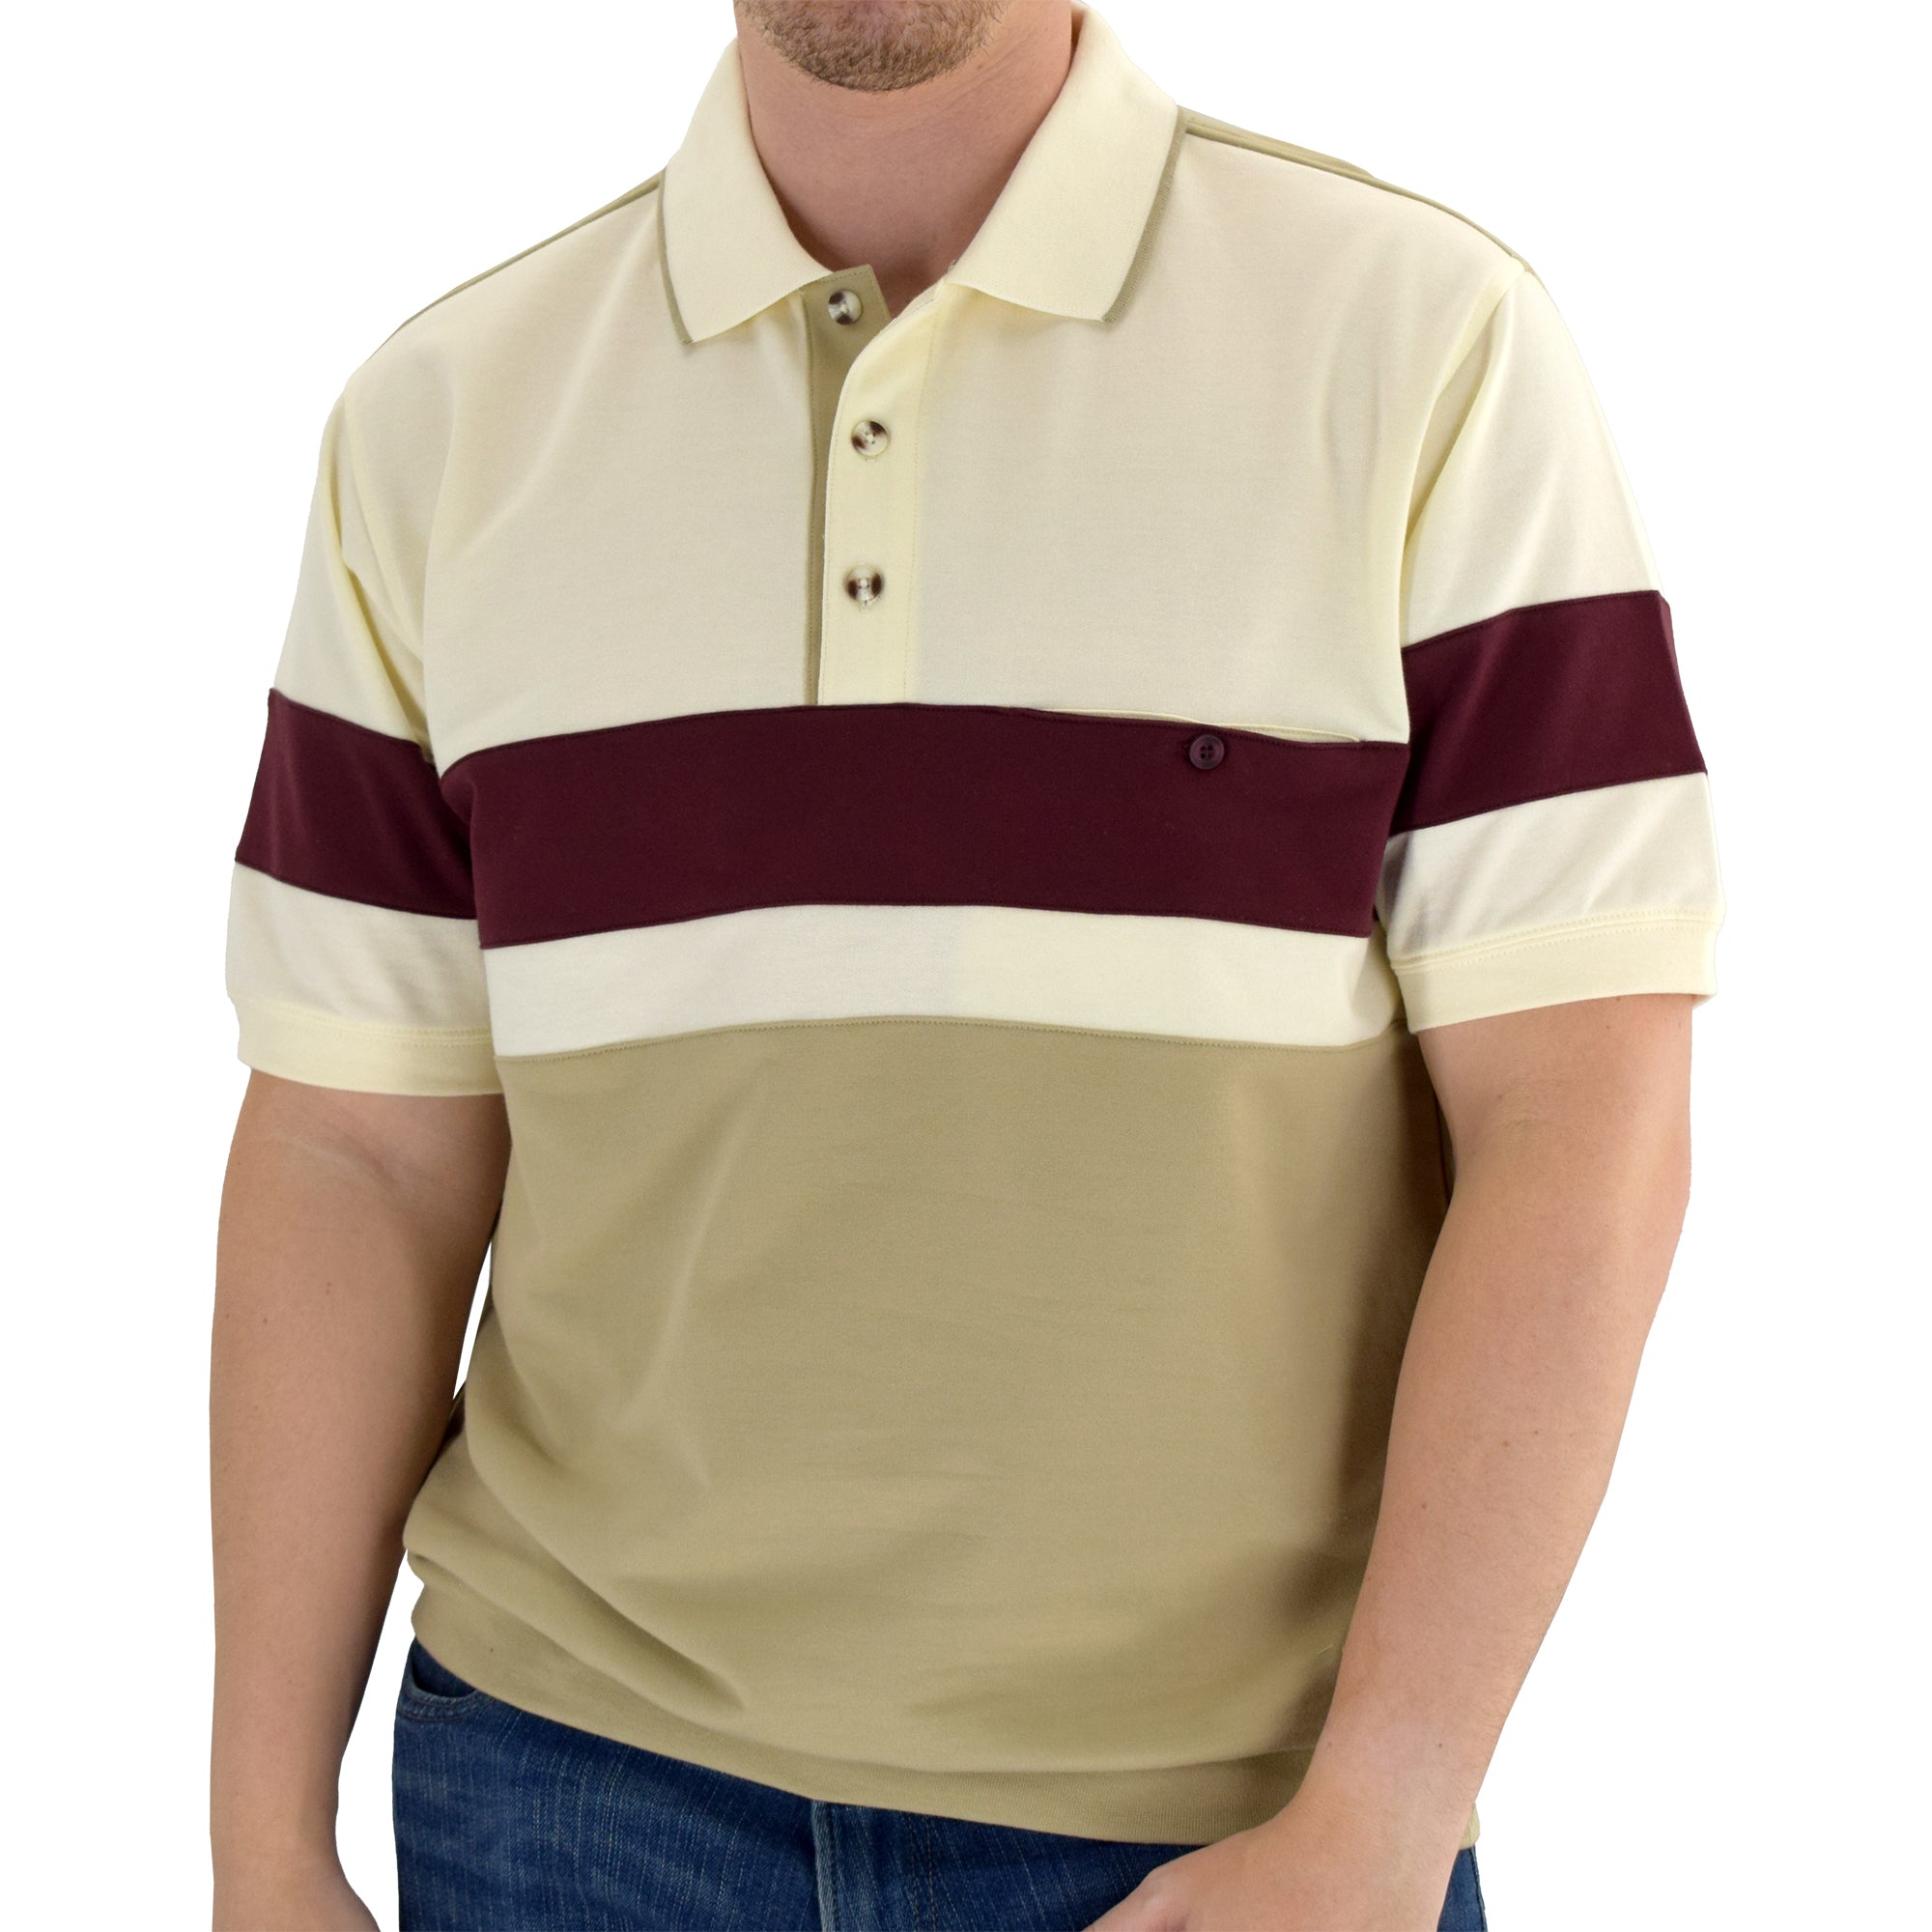 Classics by Palmland Short Sleeve Polo Shirt 6190-328 Big and Tall - Natural - theflagshirt